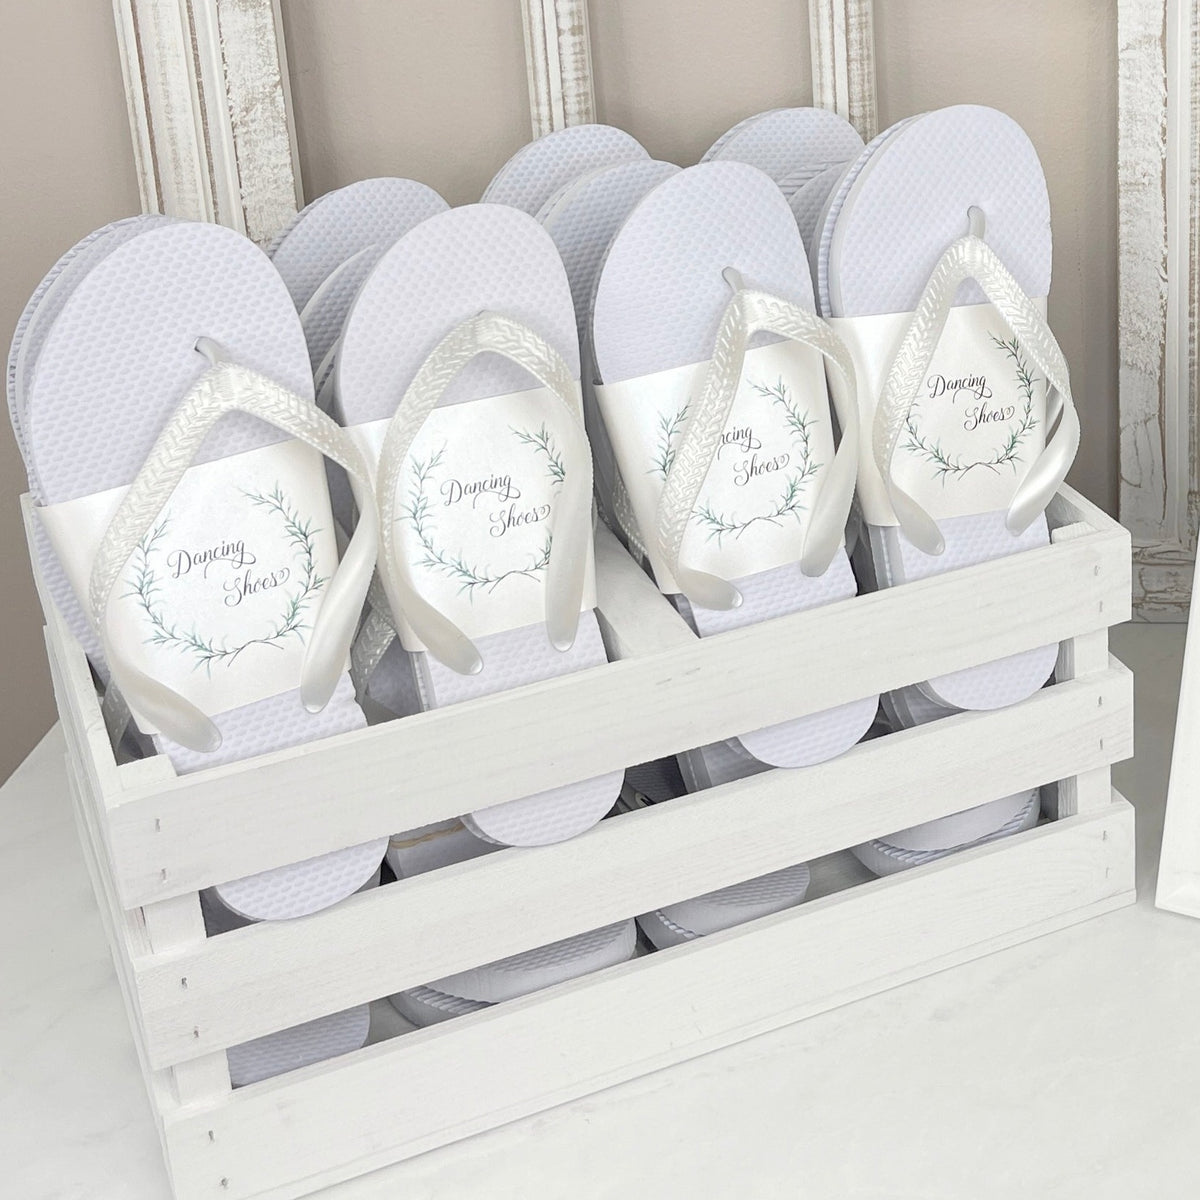 Personalised Wedding Flip flop dancing shoes basket sign